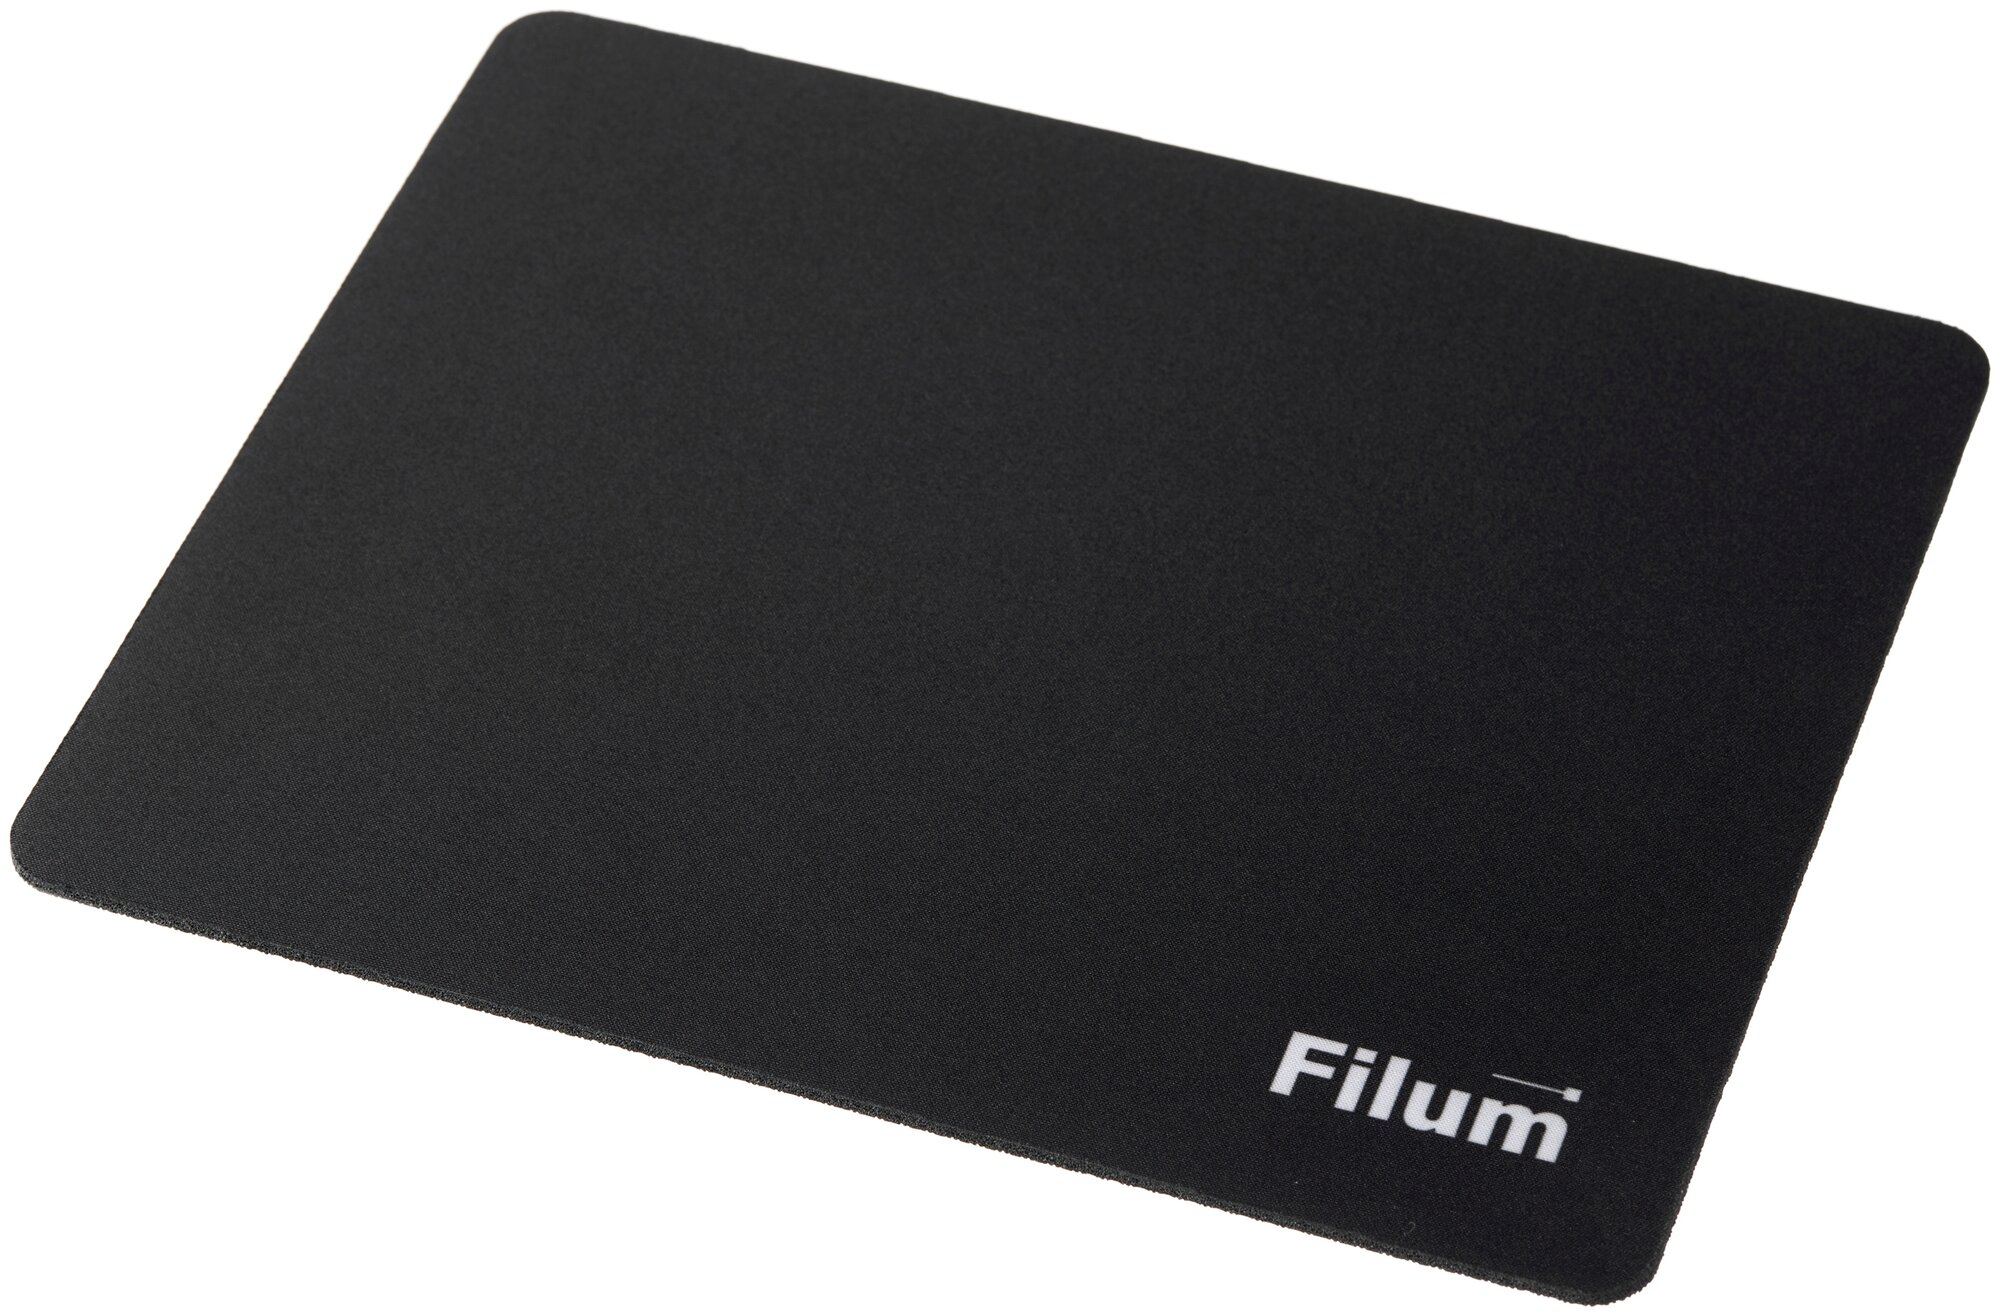 Коврик для мыши Filum FL-MP-S-BK-2 черный, 250*200*3 мм, ткань+резина.